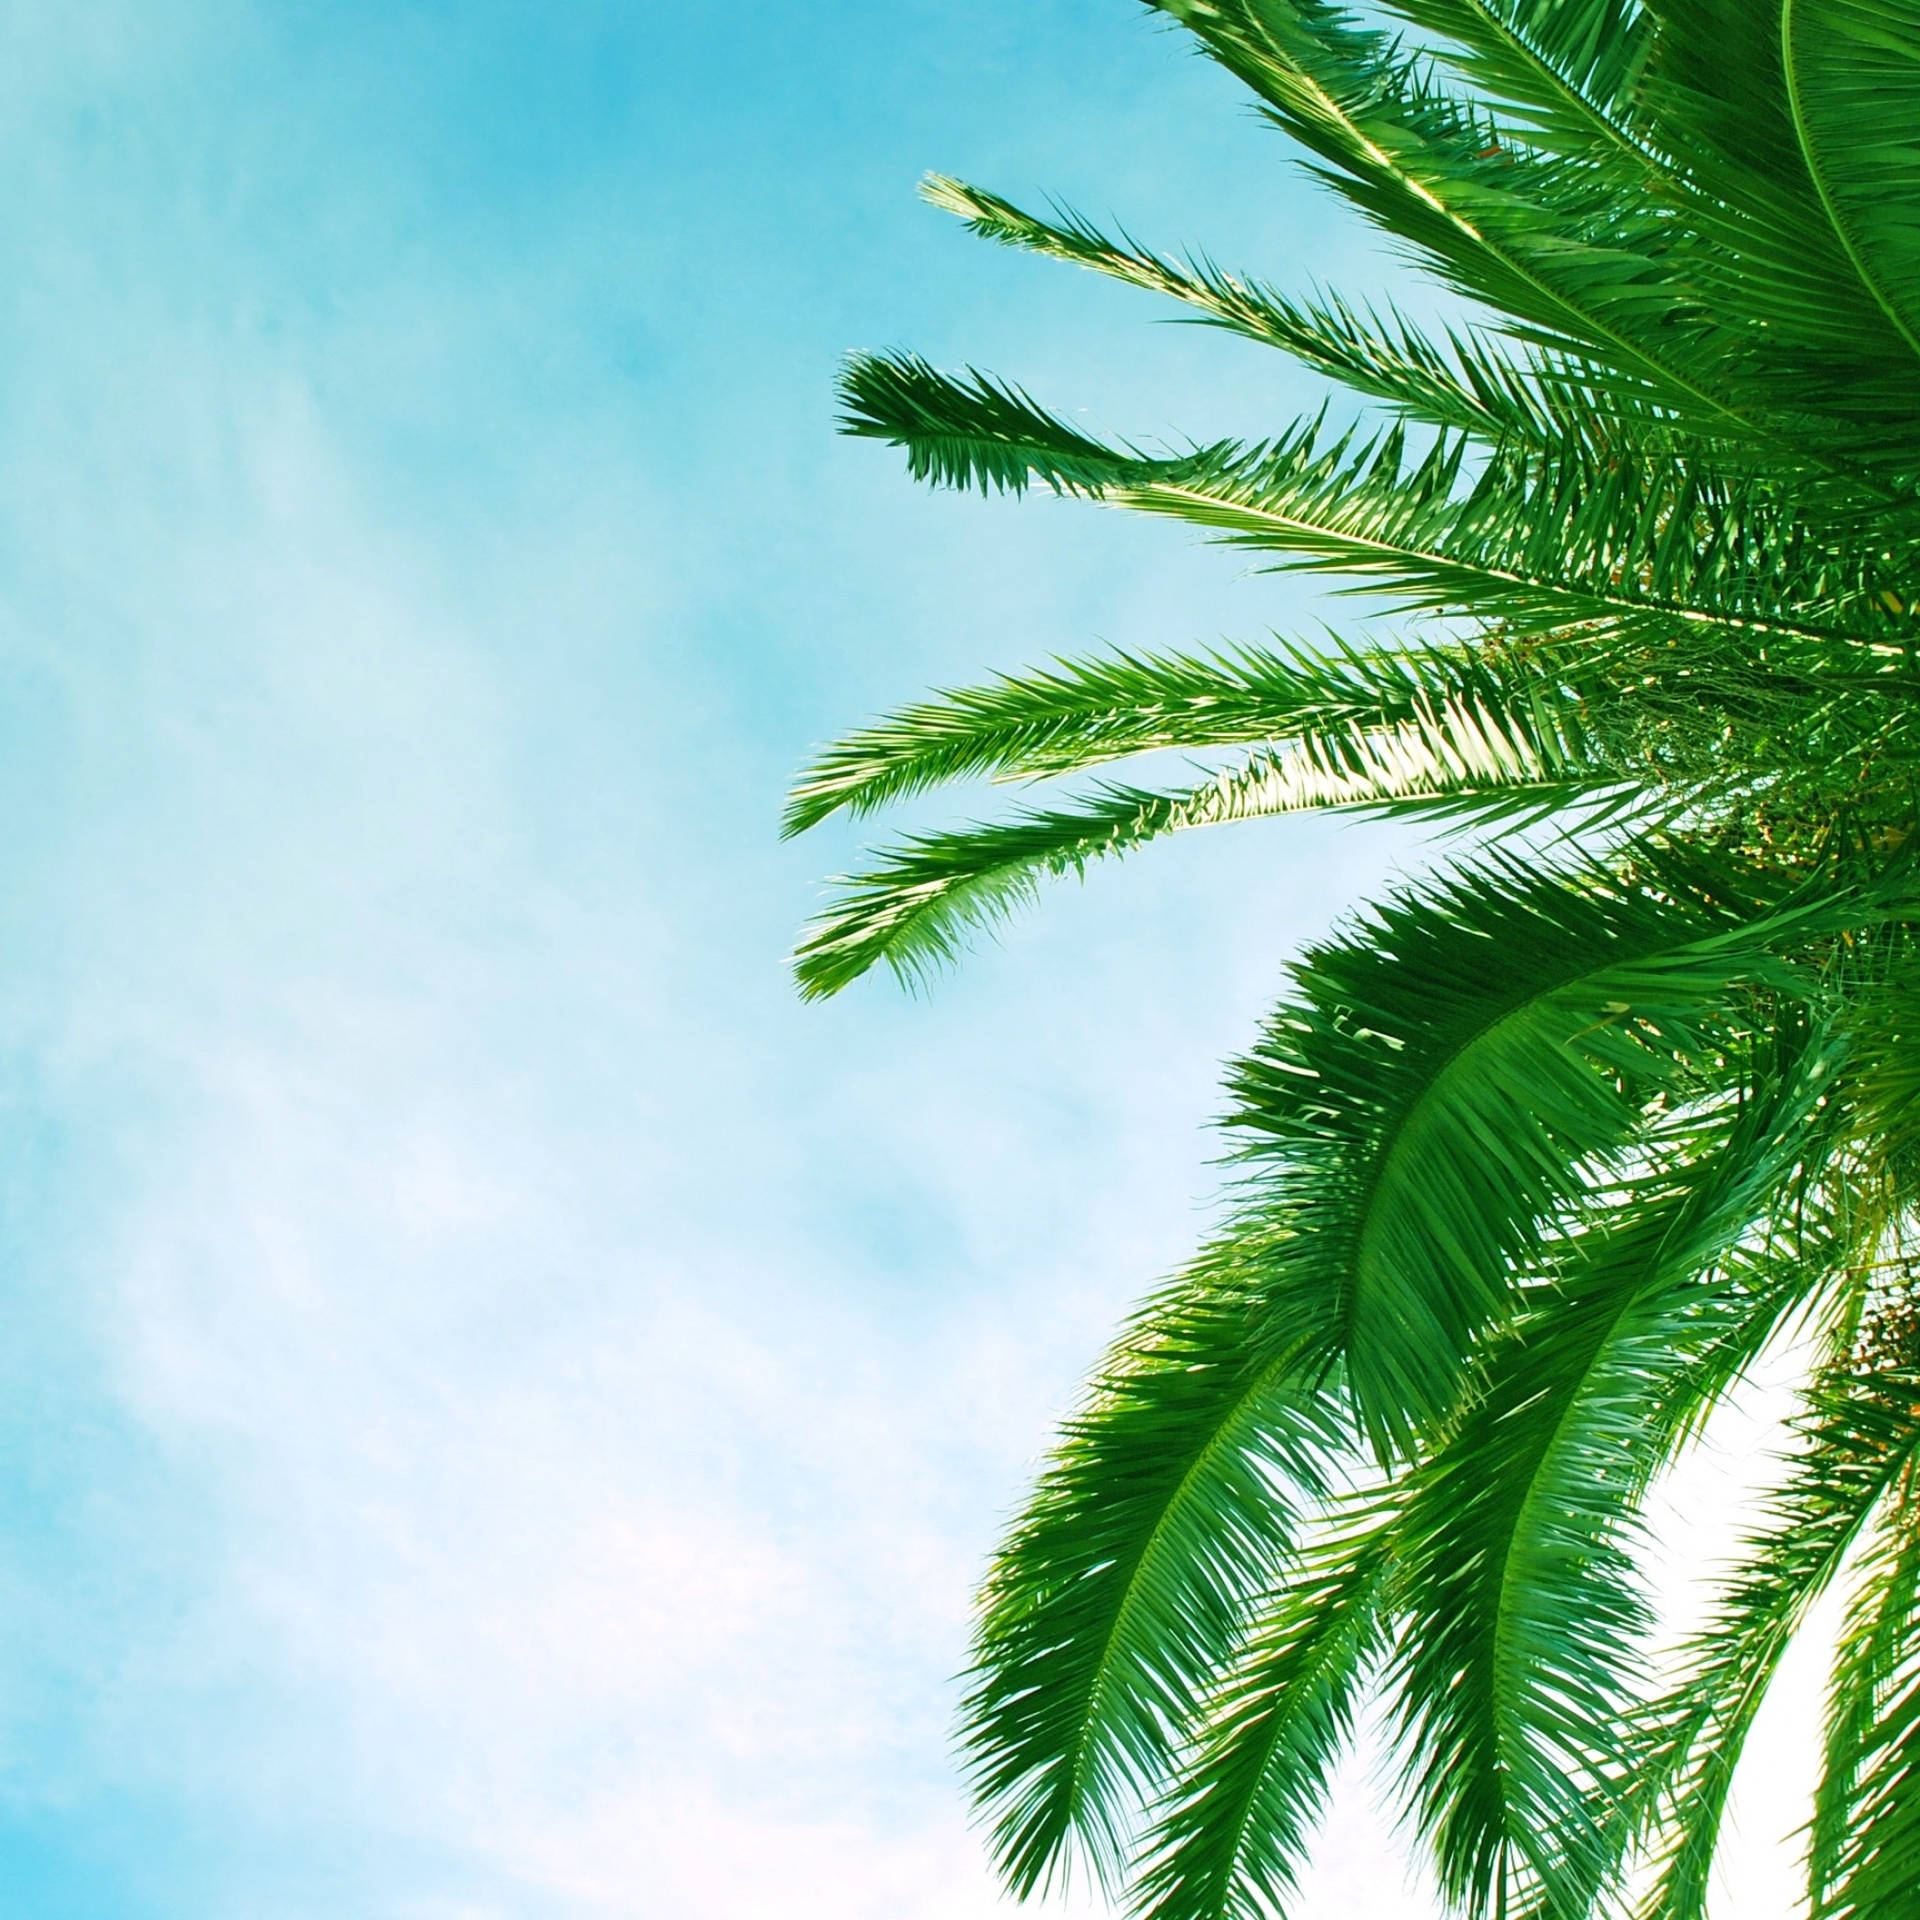 Palm Tree Leaves On Azure Sky Background